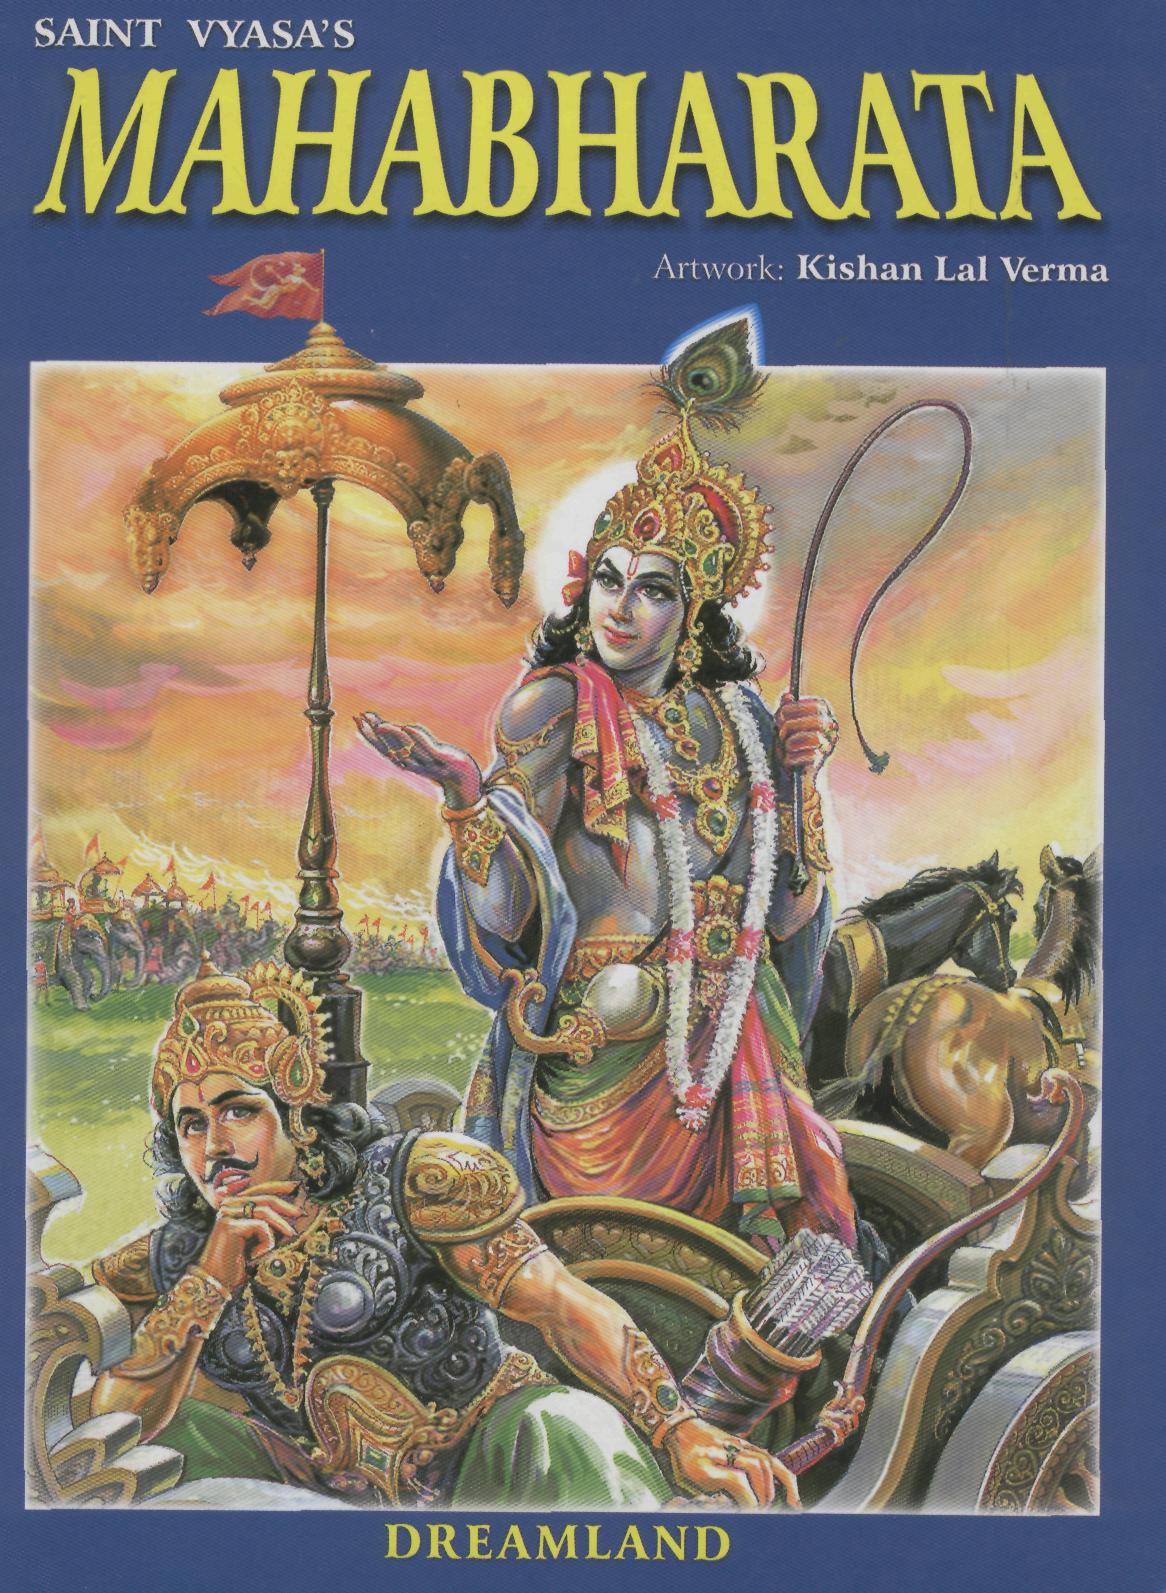 Buy Mahabharat book Online @ ₹800 from ShopClues